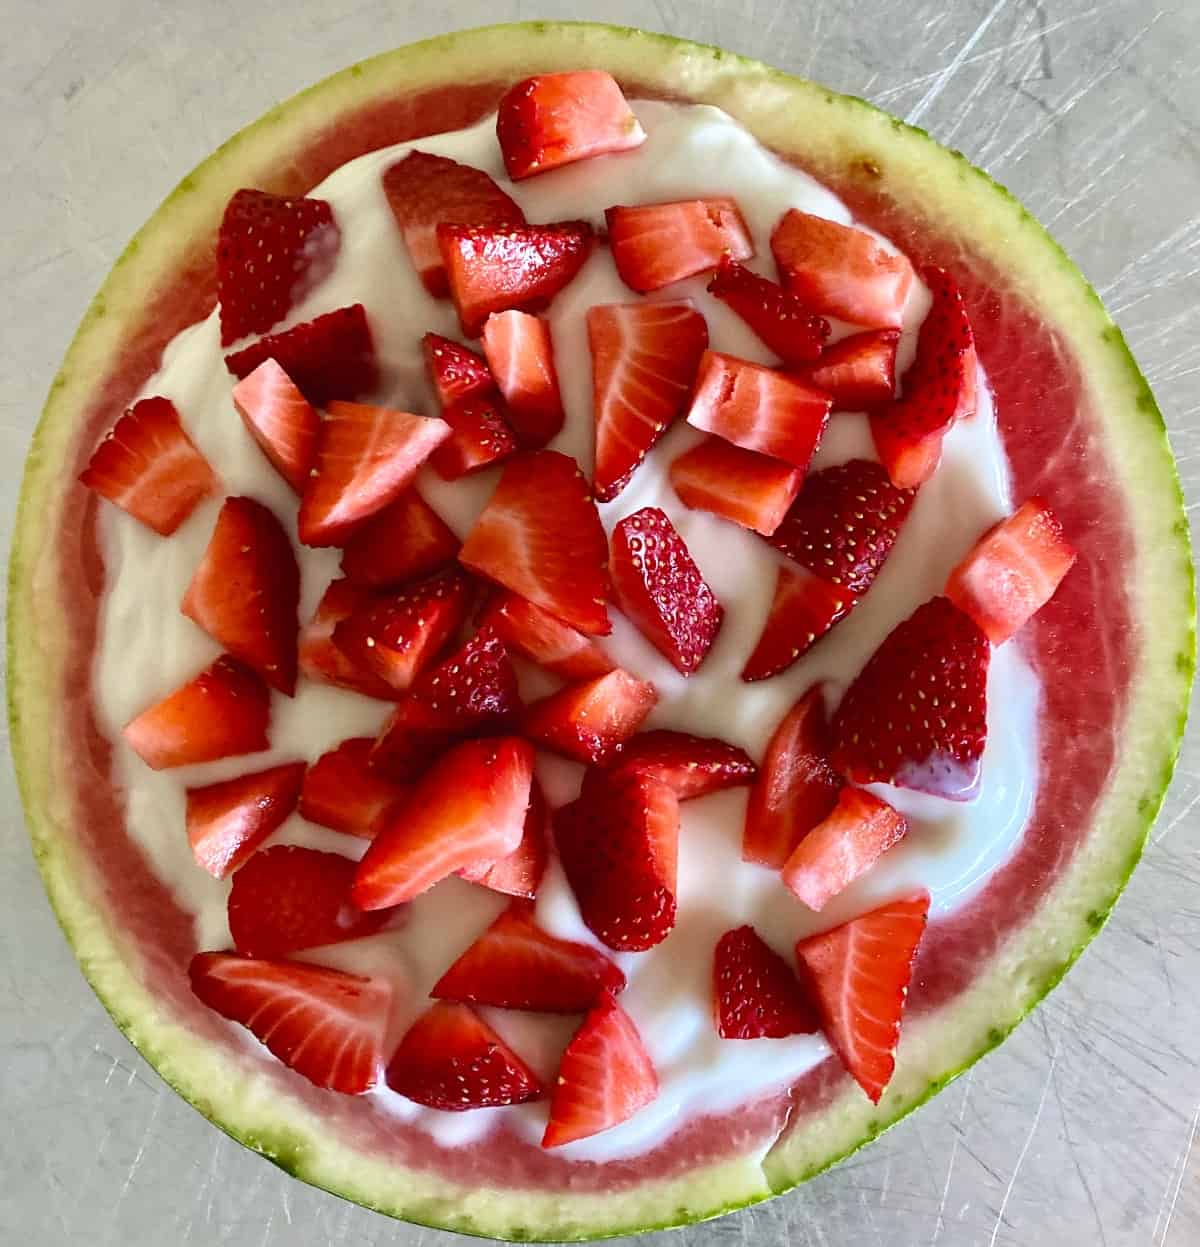 Watermelon slice topped with yogurt and fresh strawberries.